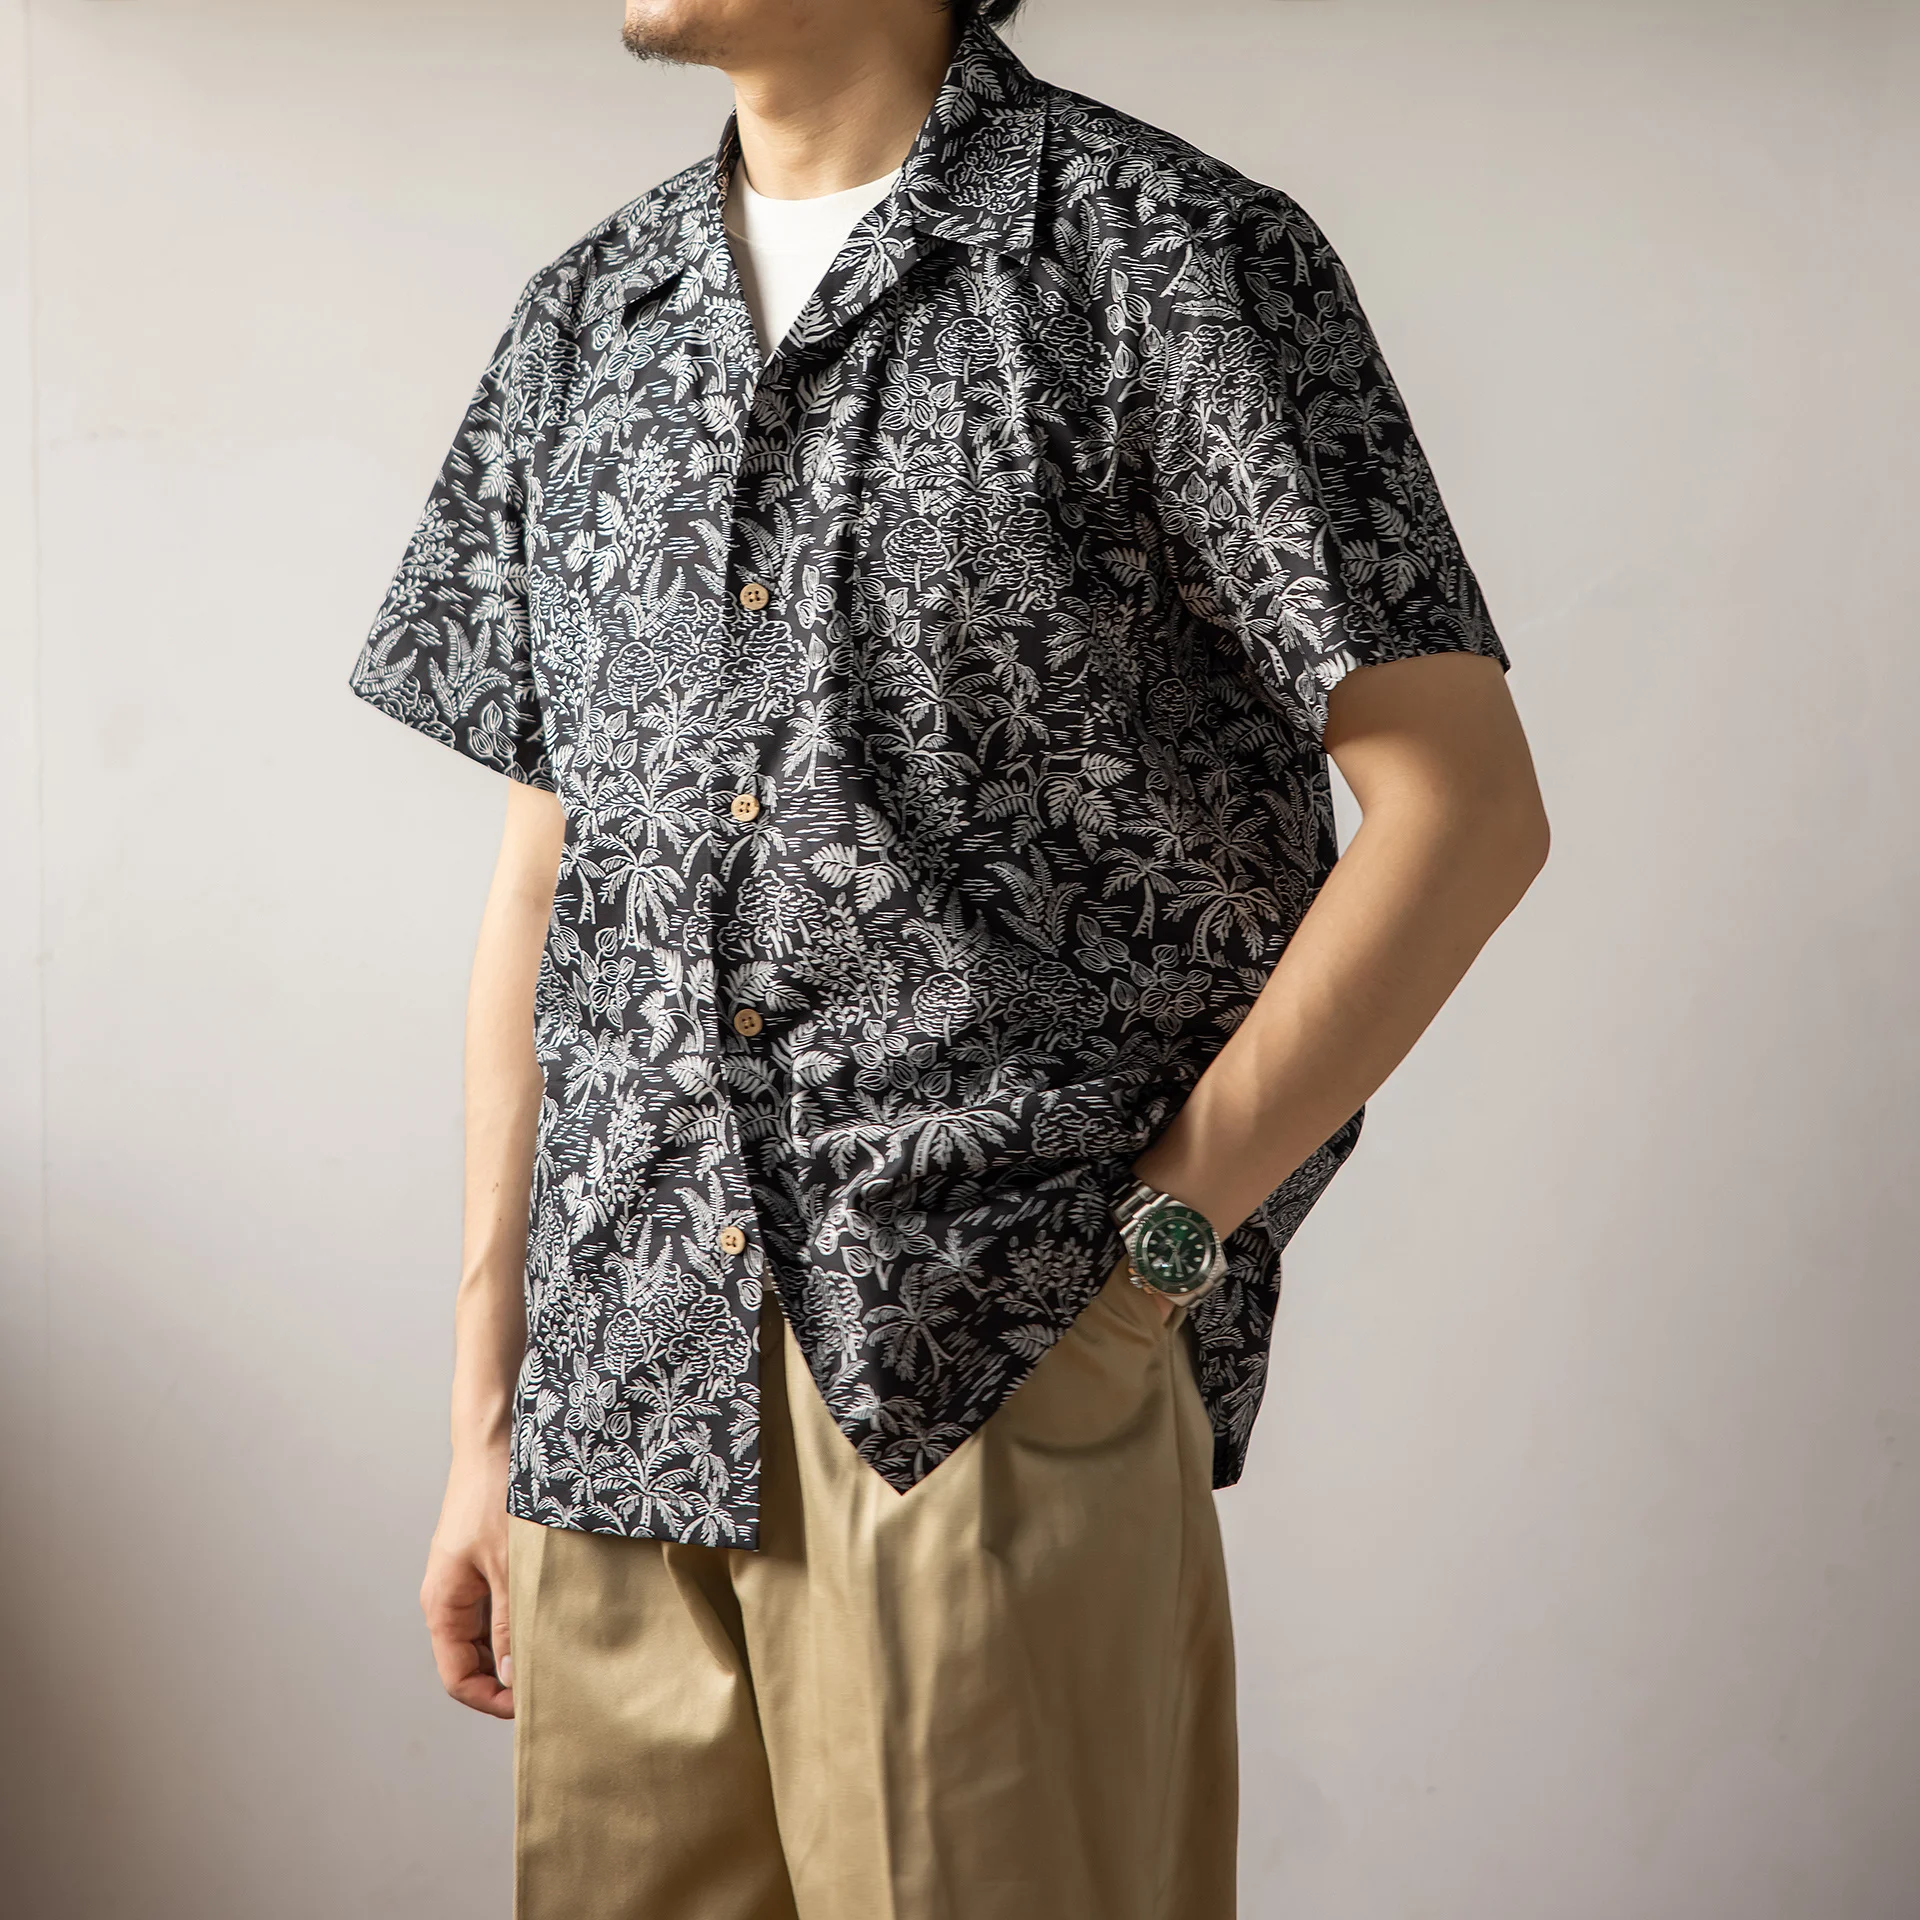 HW-0010 Big US Size Genuine Quality Vintage Looking Loose Fitting Hawaii Aloha Cotton Printing Shirt